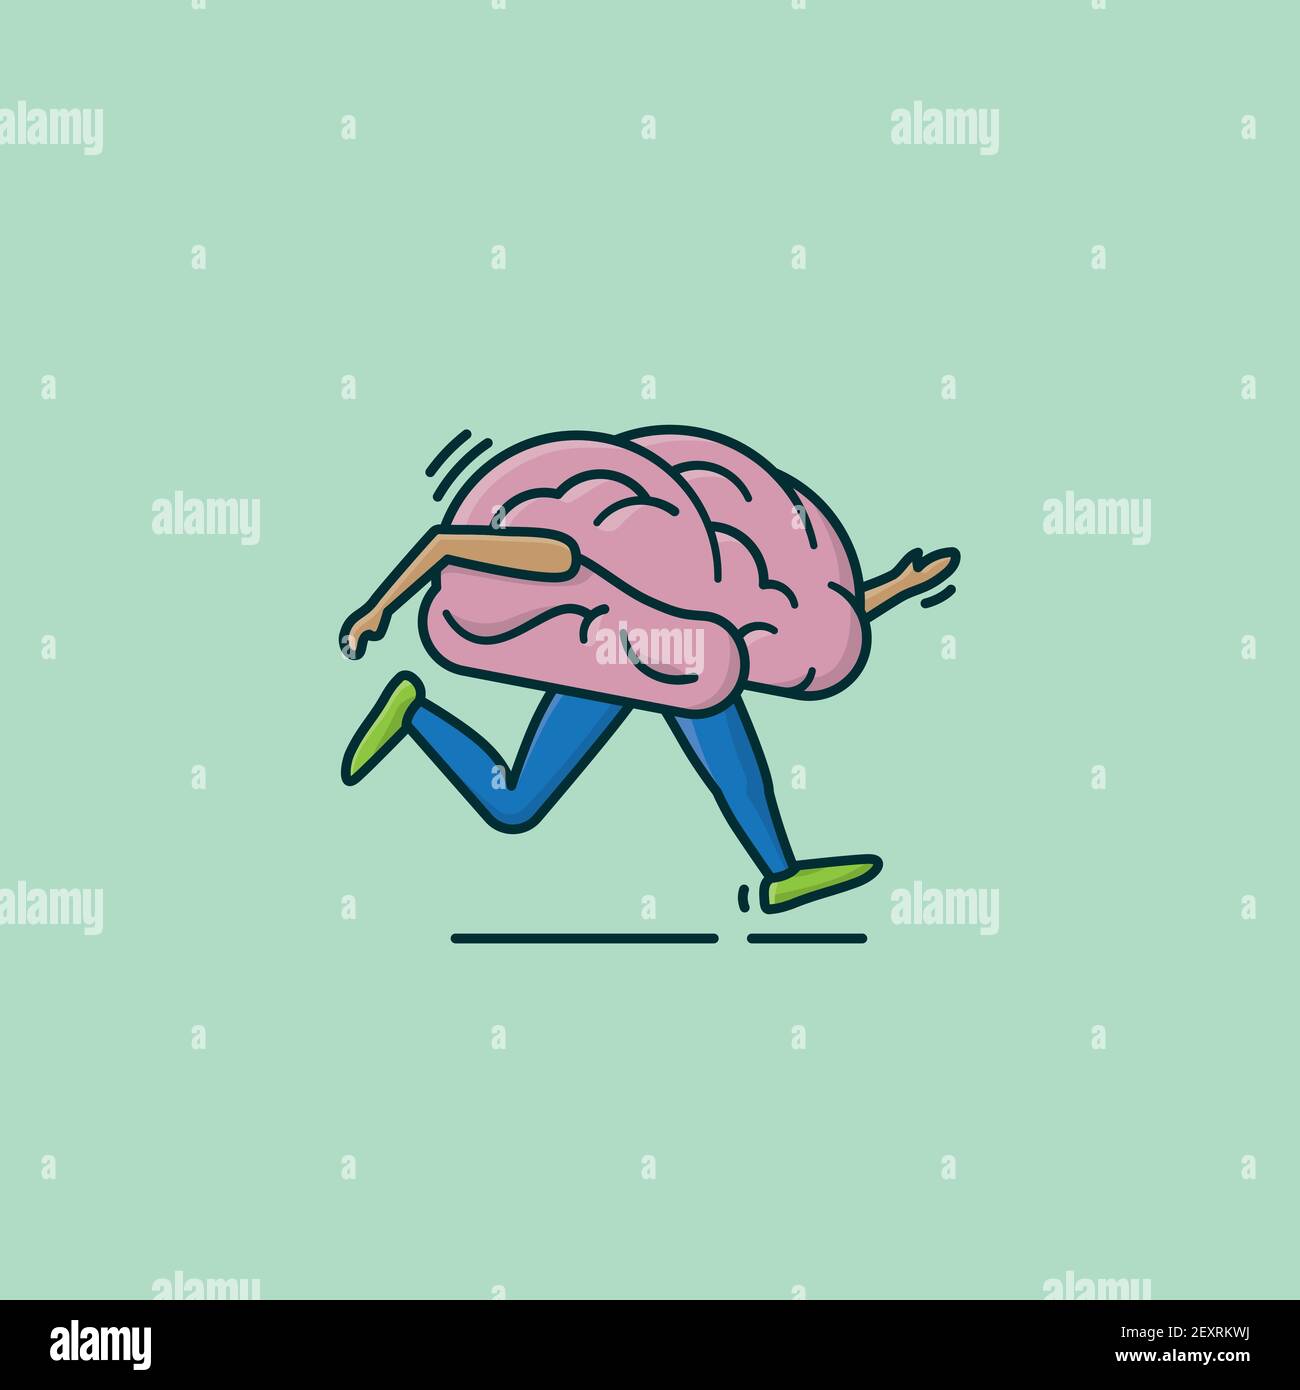 Running brain cartoon vector illustration for Train Your Brain Day on October 13 Stock Vector